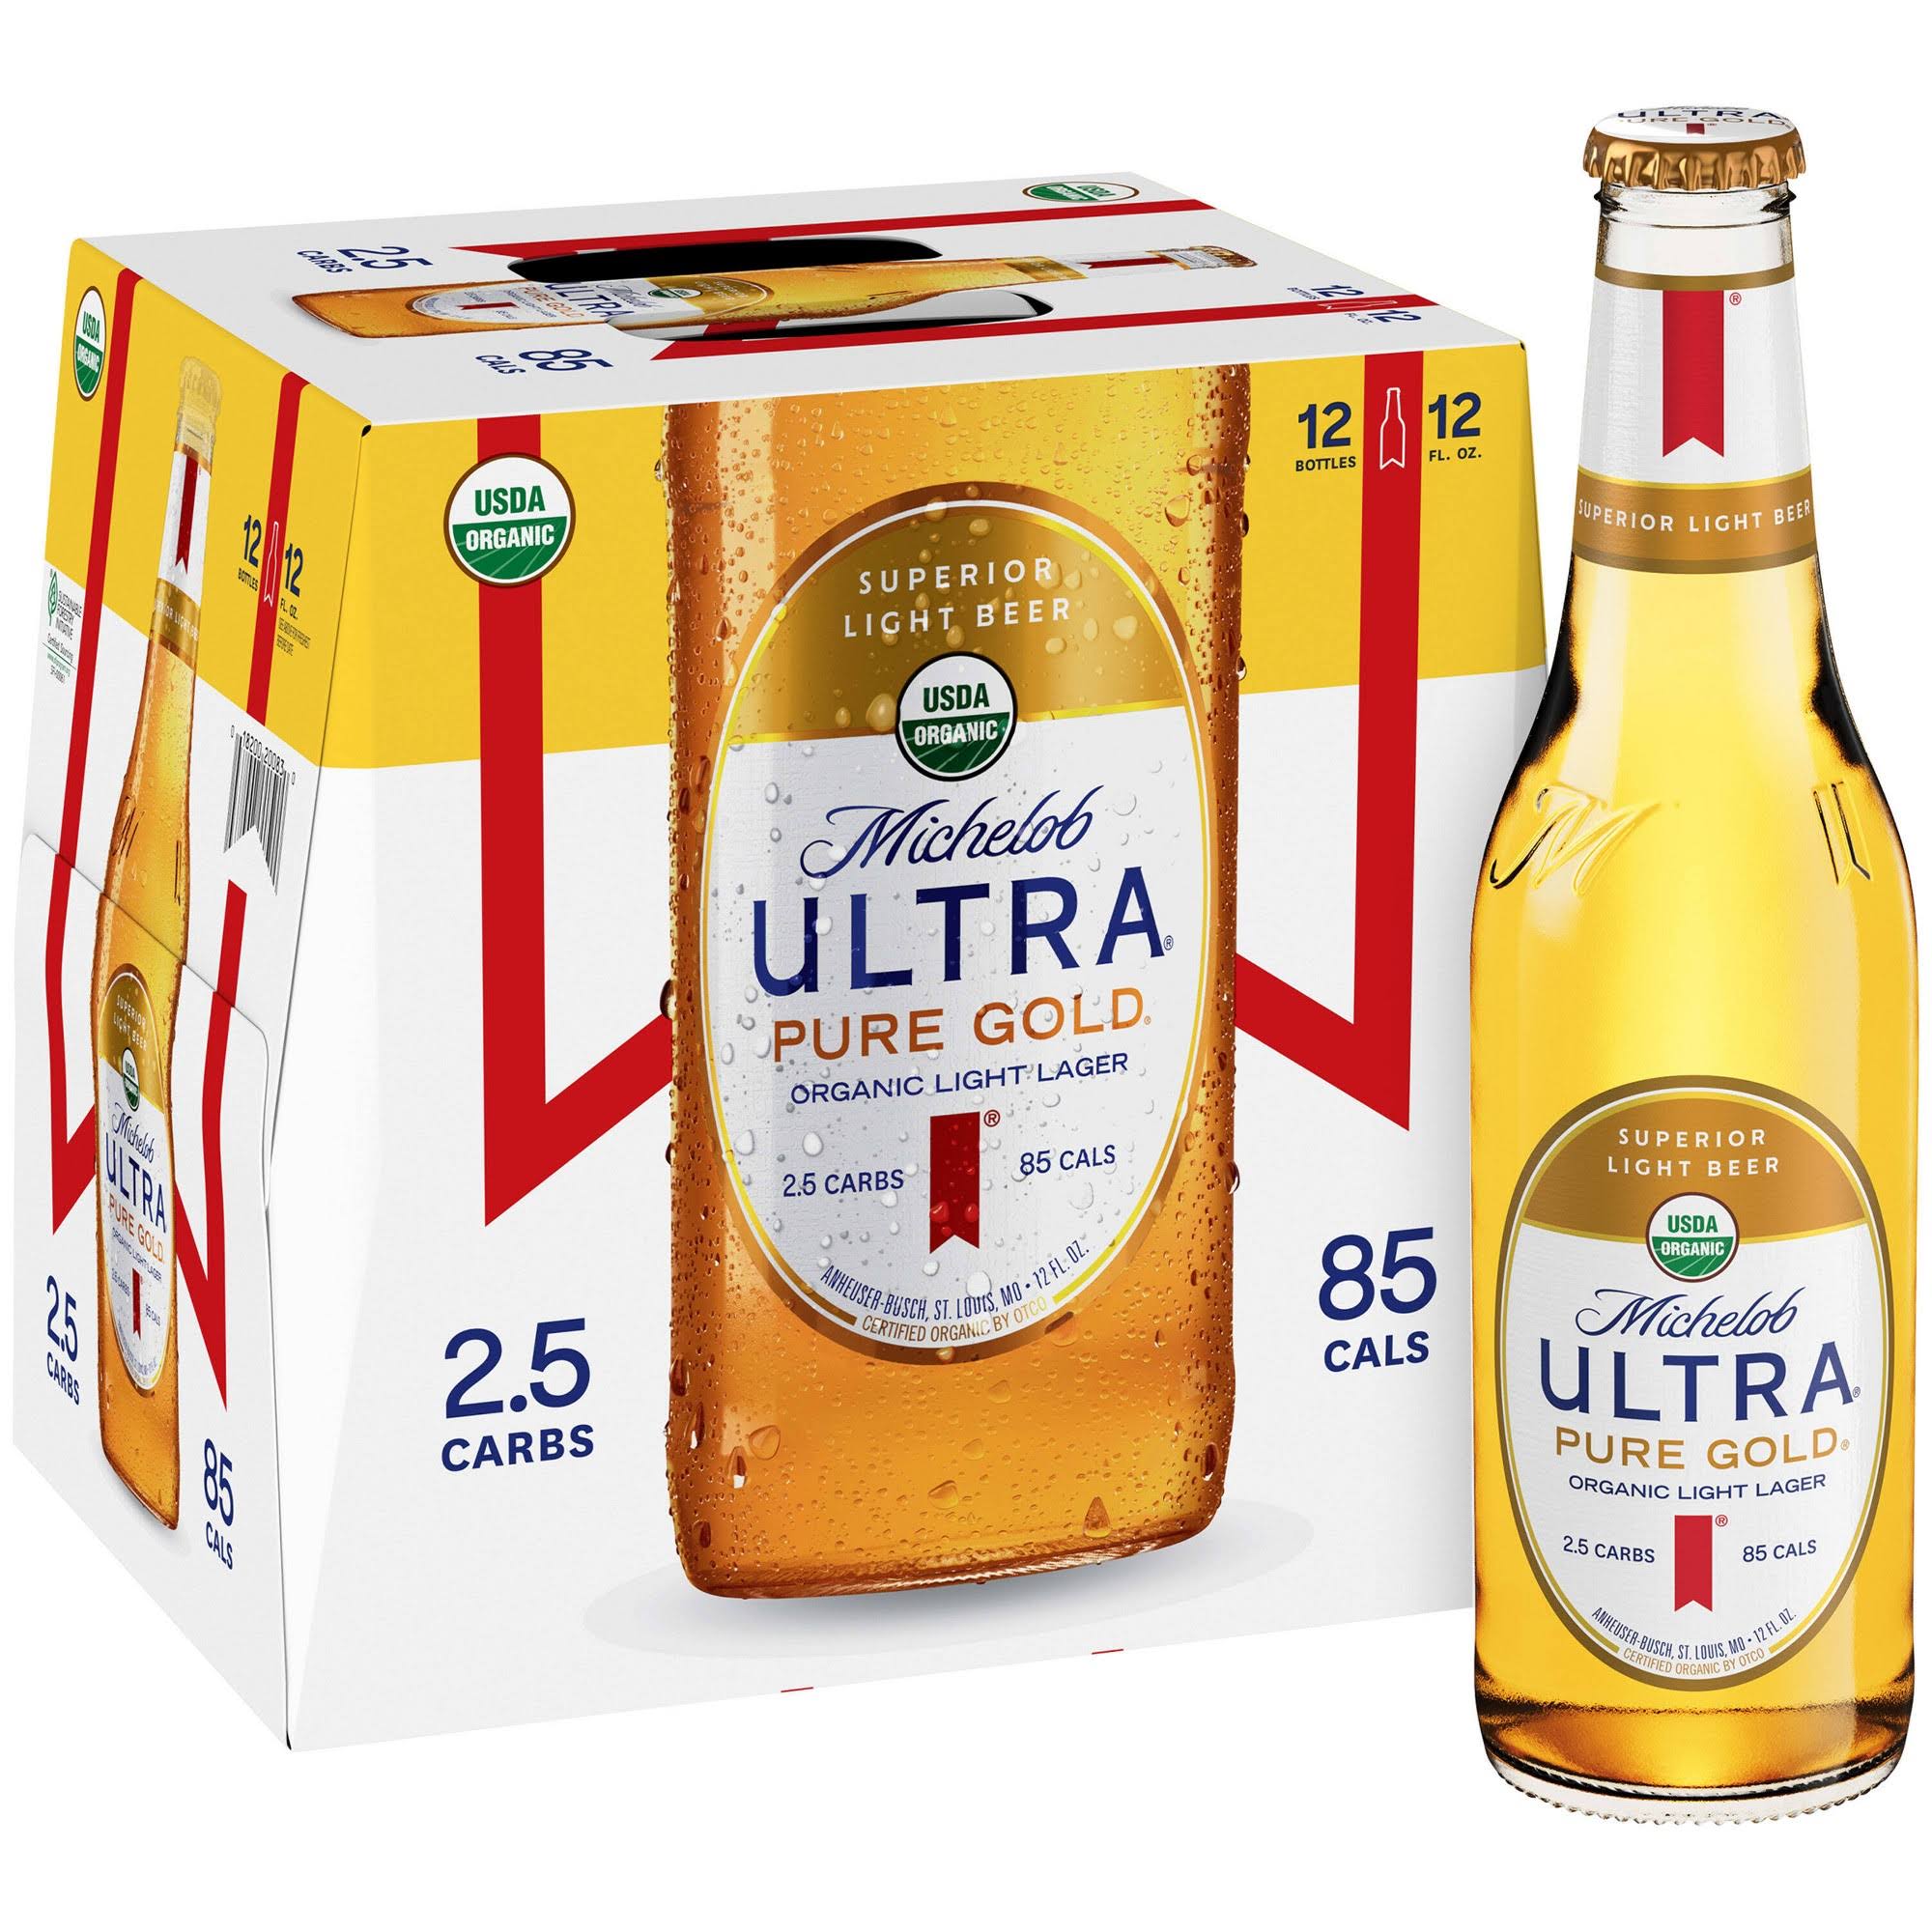 Michelob Ultra Pure Gold Beer, Organic, Light Lager - 12 pack, 12 fl oz bottles